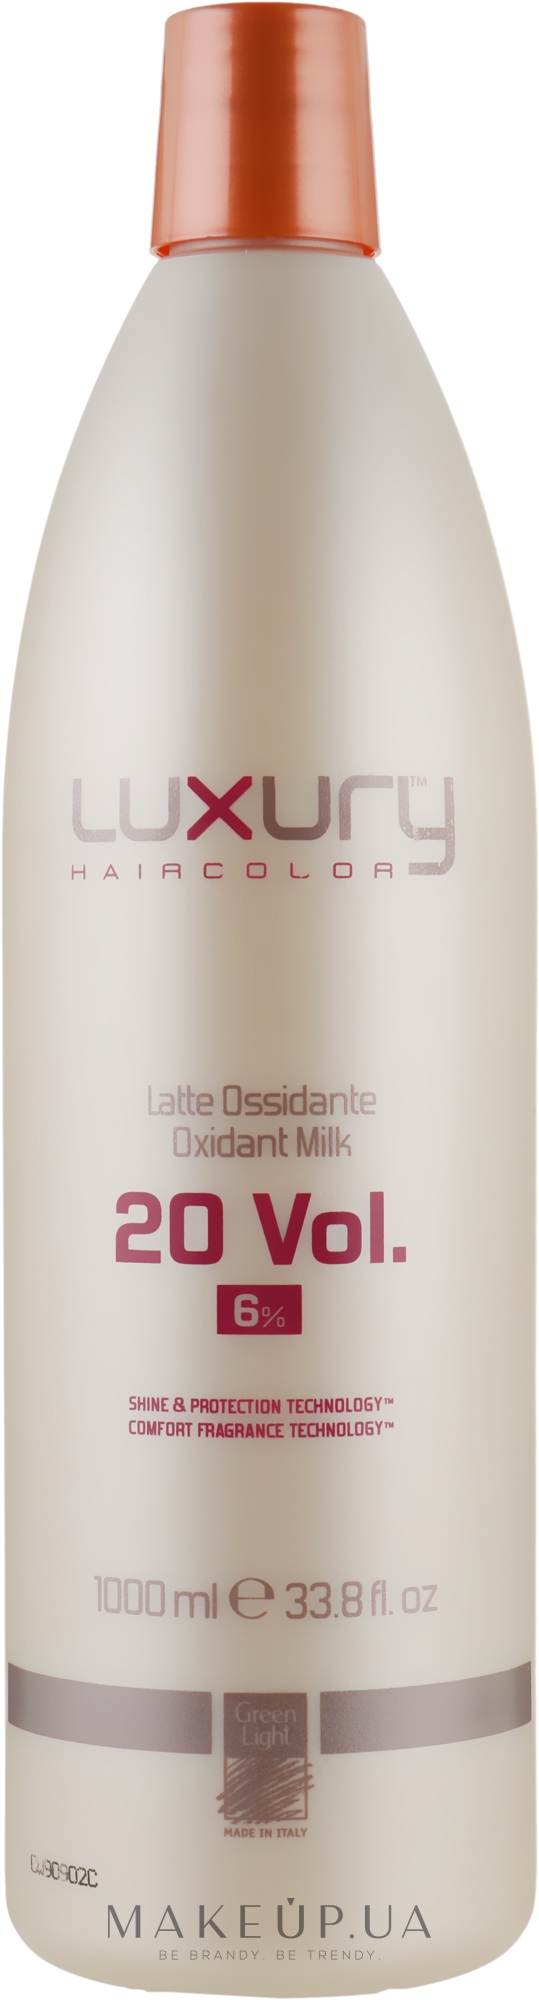 Молочный Оксидант - Green Light Luxury Haircolor Oxidant Milk 6% 20 vol. — фото 1000ml